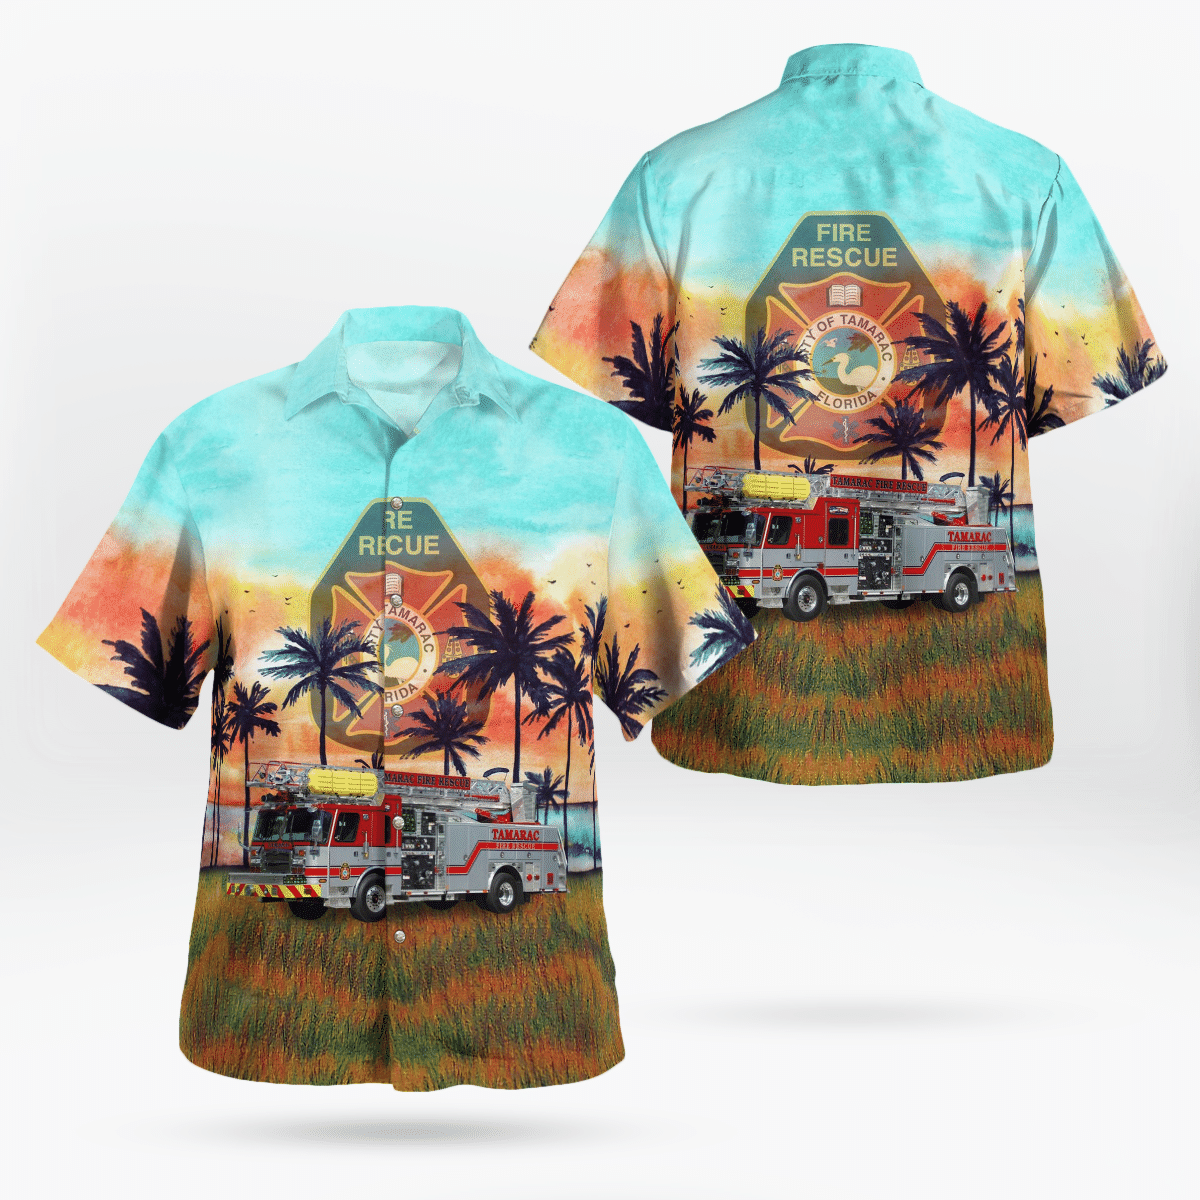 Why don't you order Hot Hawaiian Shirt today? 305